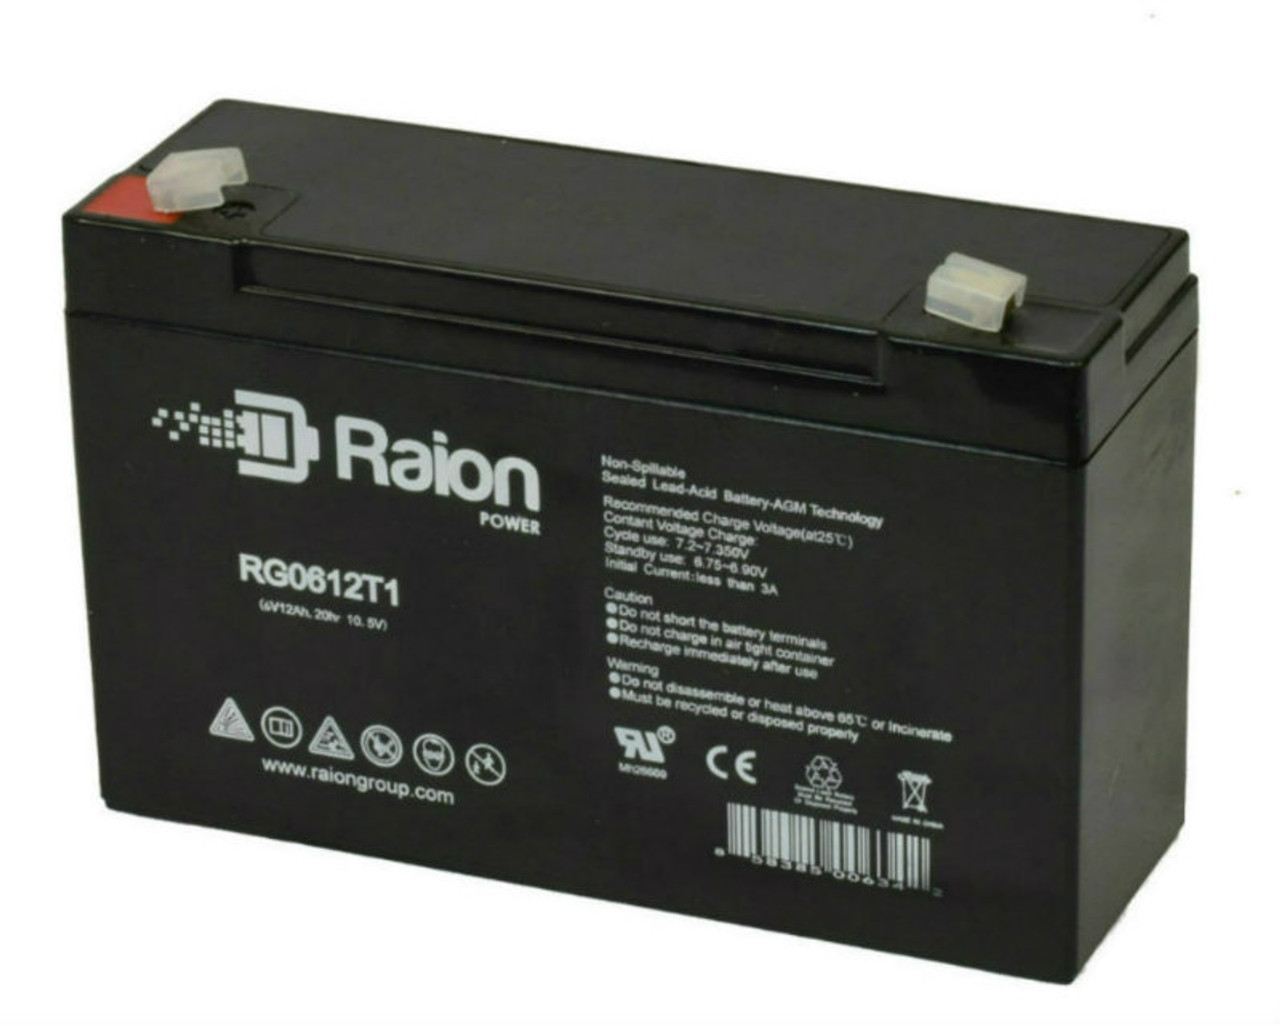 Raion Power RG06120T1 Replacement 6V 12Ah Emergency Light Battery for Sonnenschein 4245139800